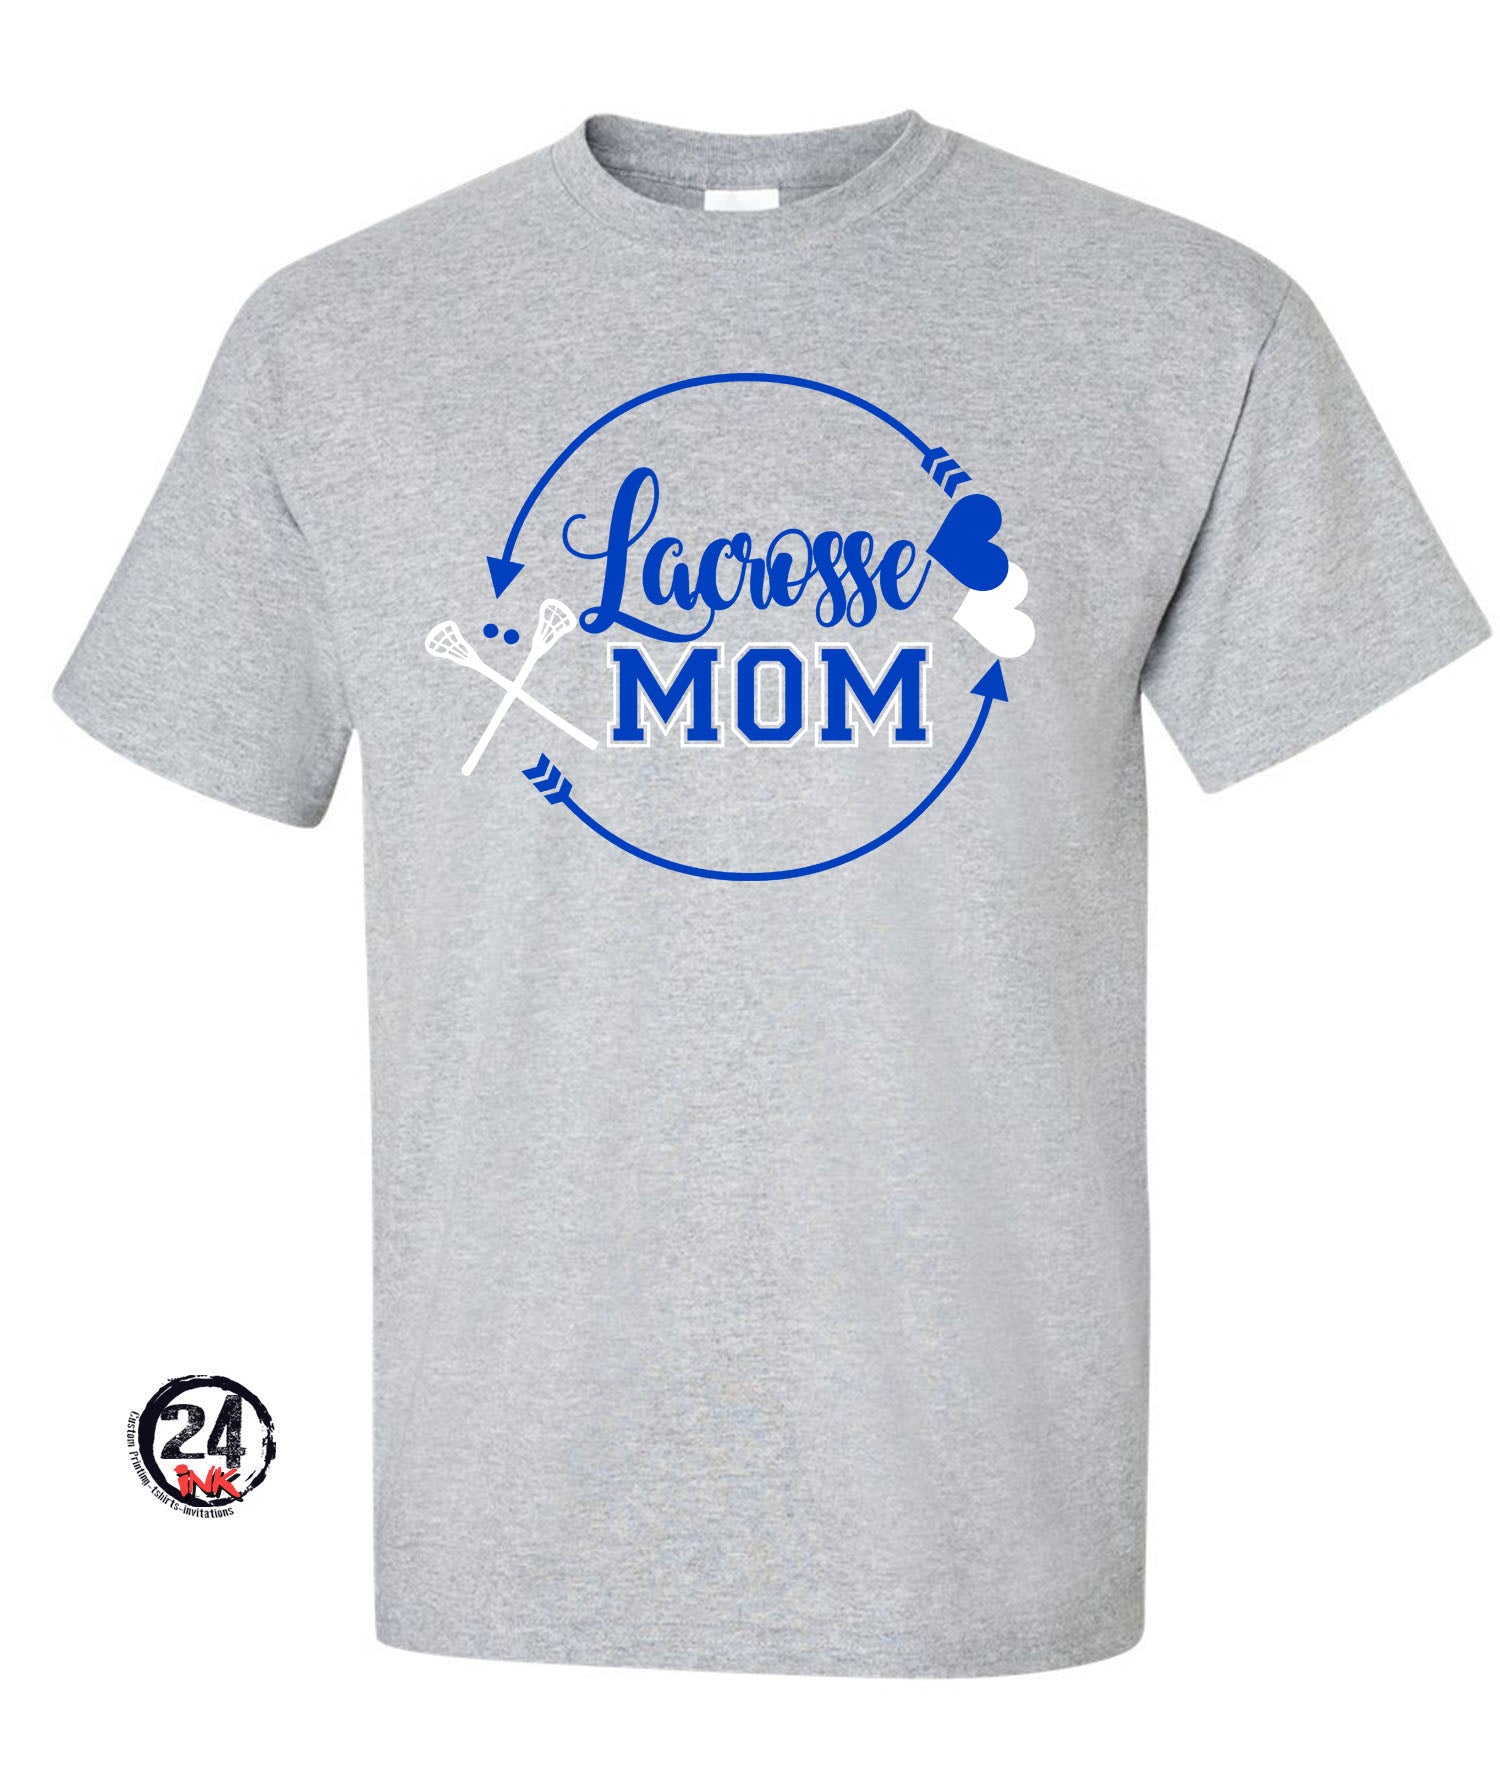 Lacrosse Mom Shirt, gray and royal